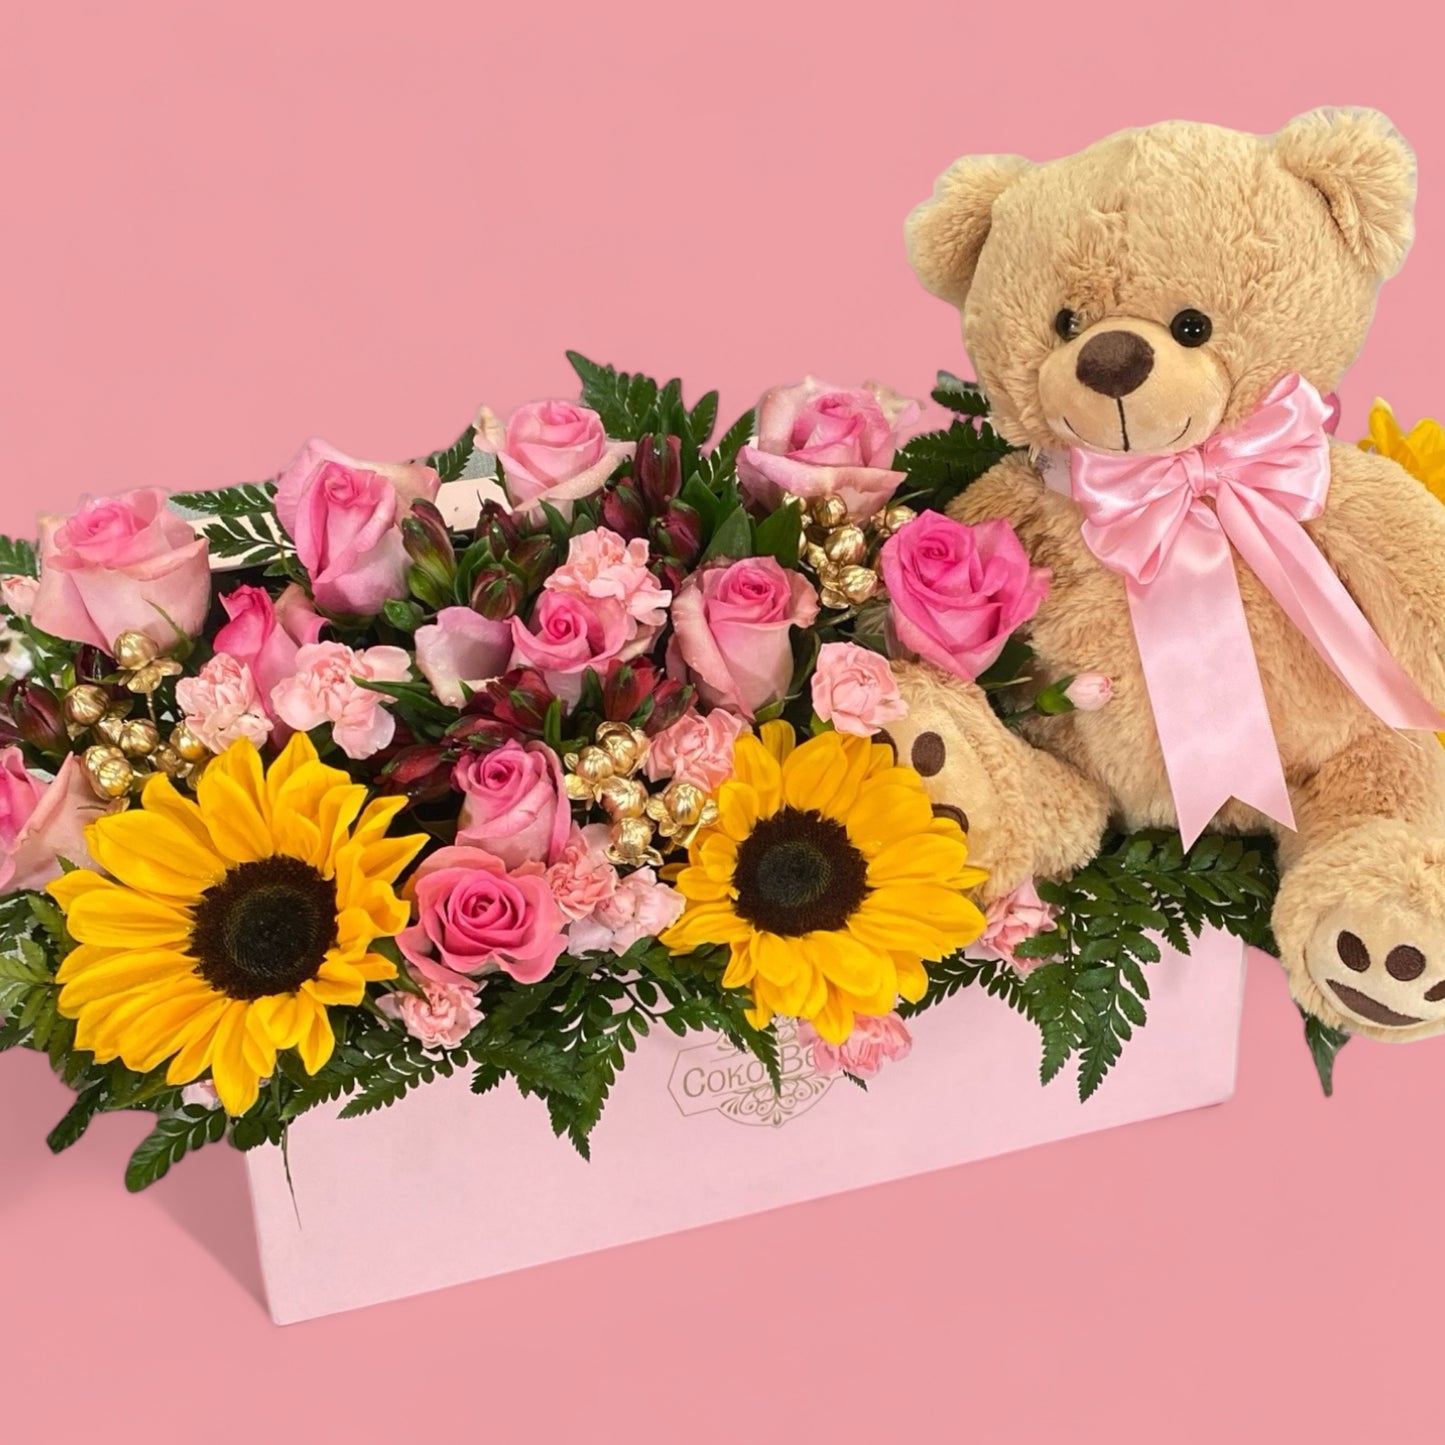 Teddy Bear & Flowers